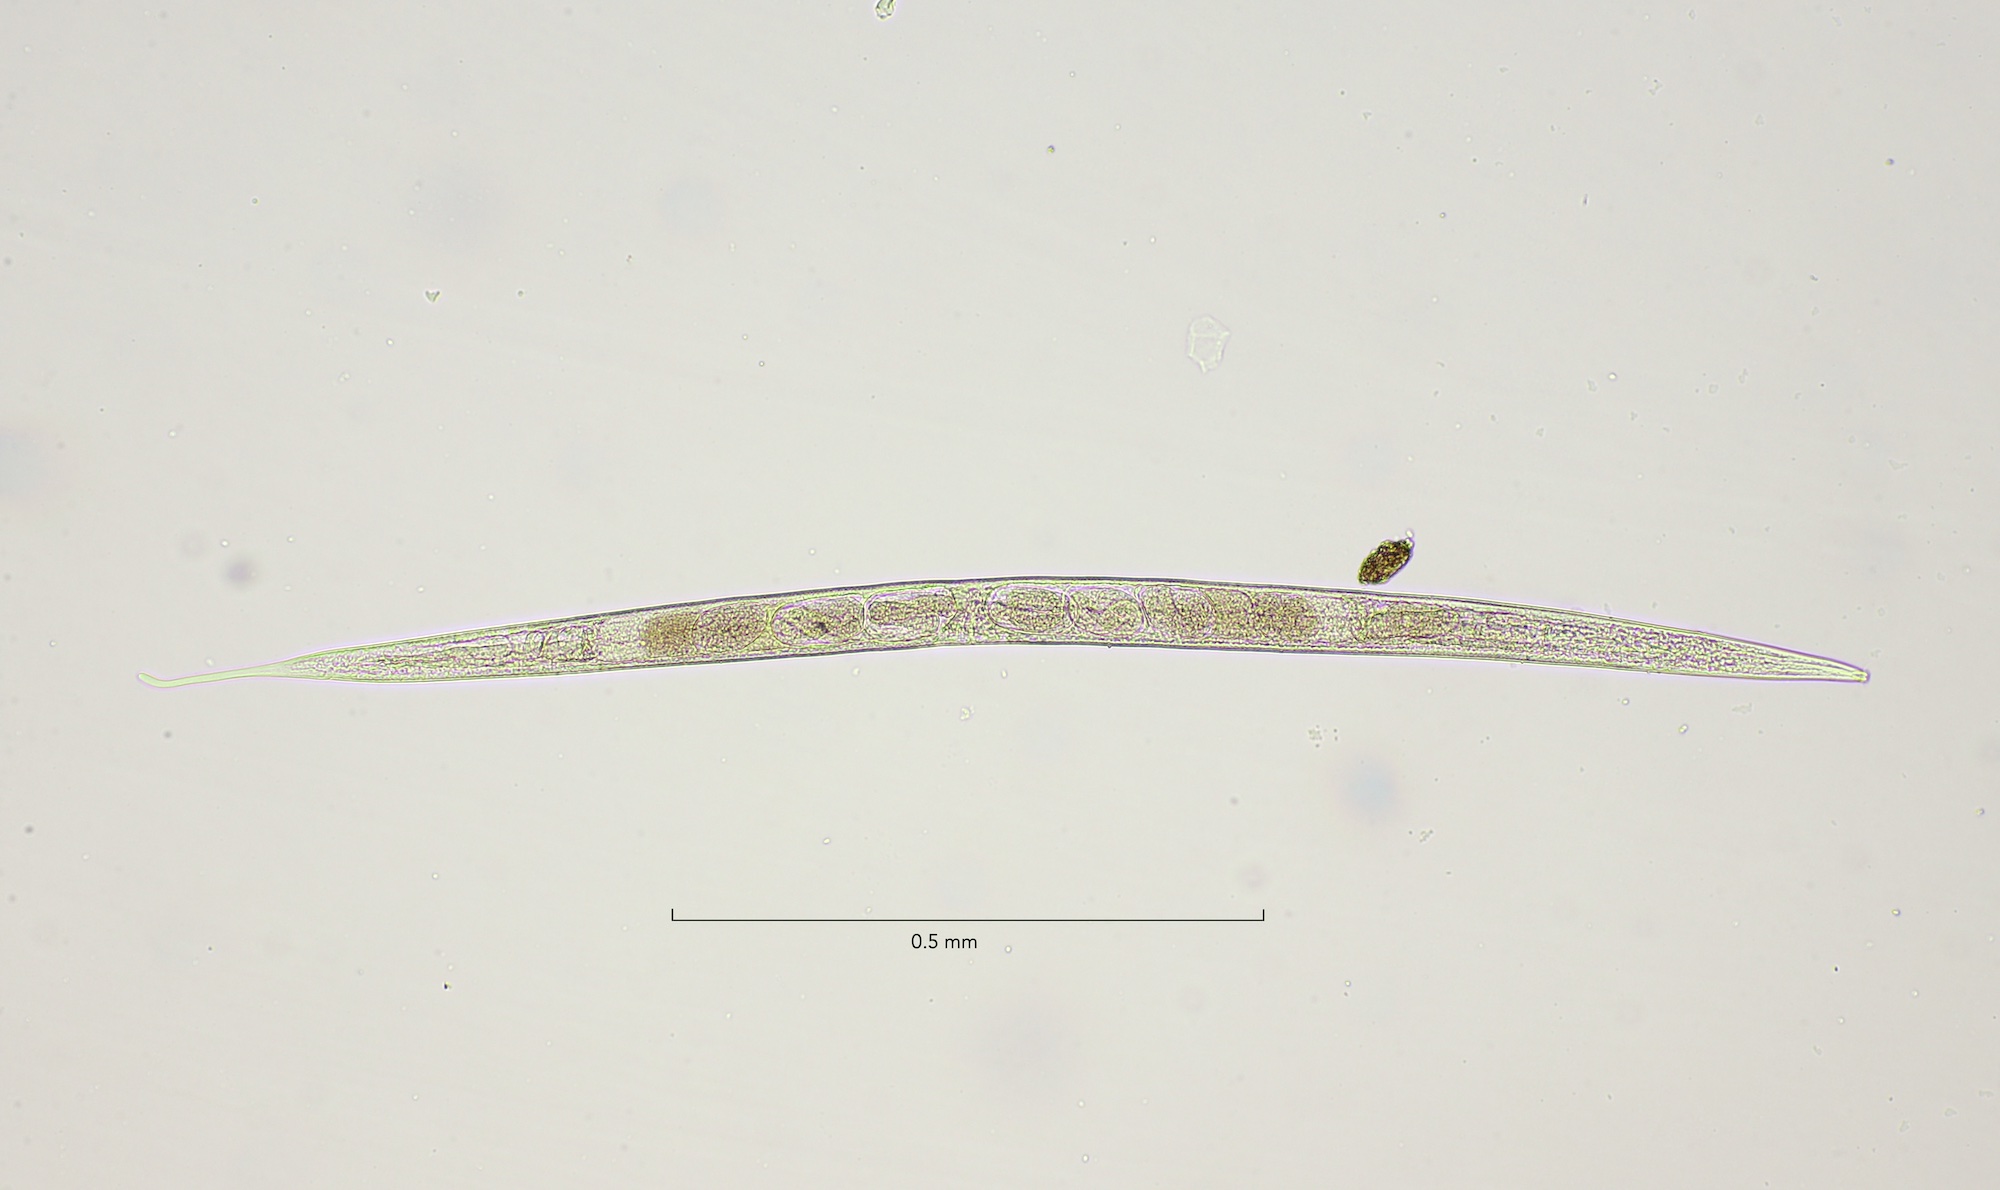 Anoplostoma viviparum, Slikken van Flakkee 9-4-2023 overview 10x